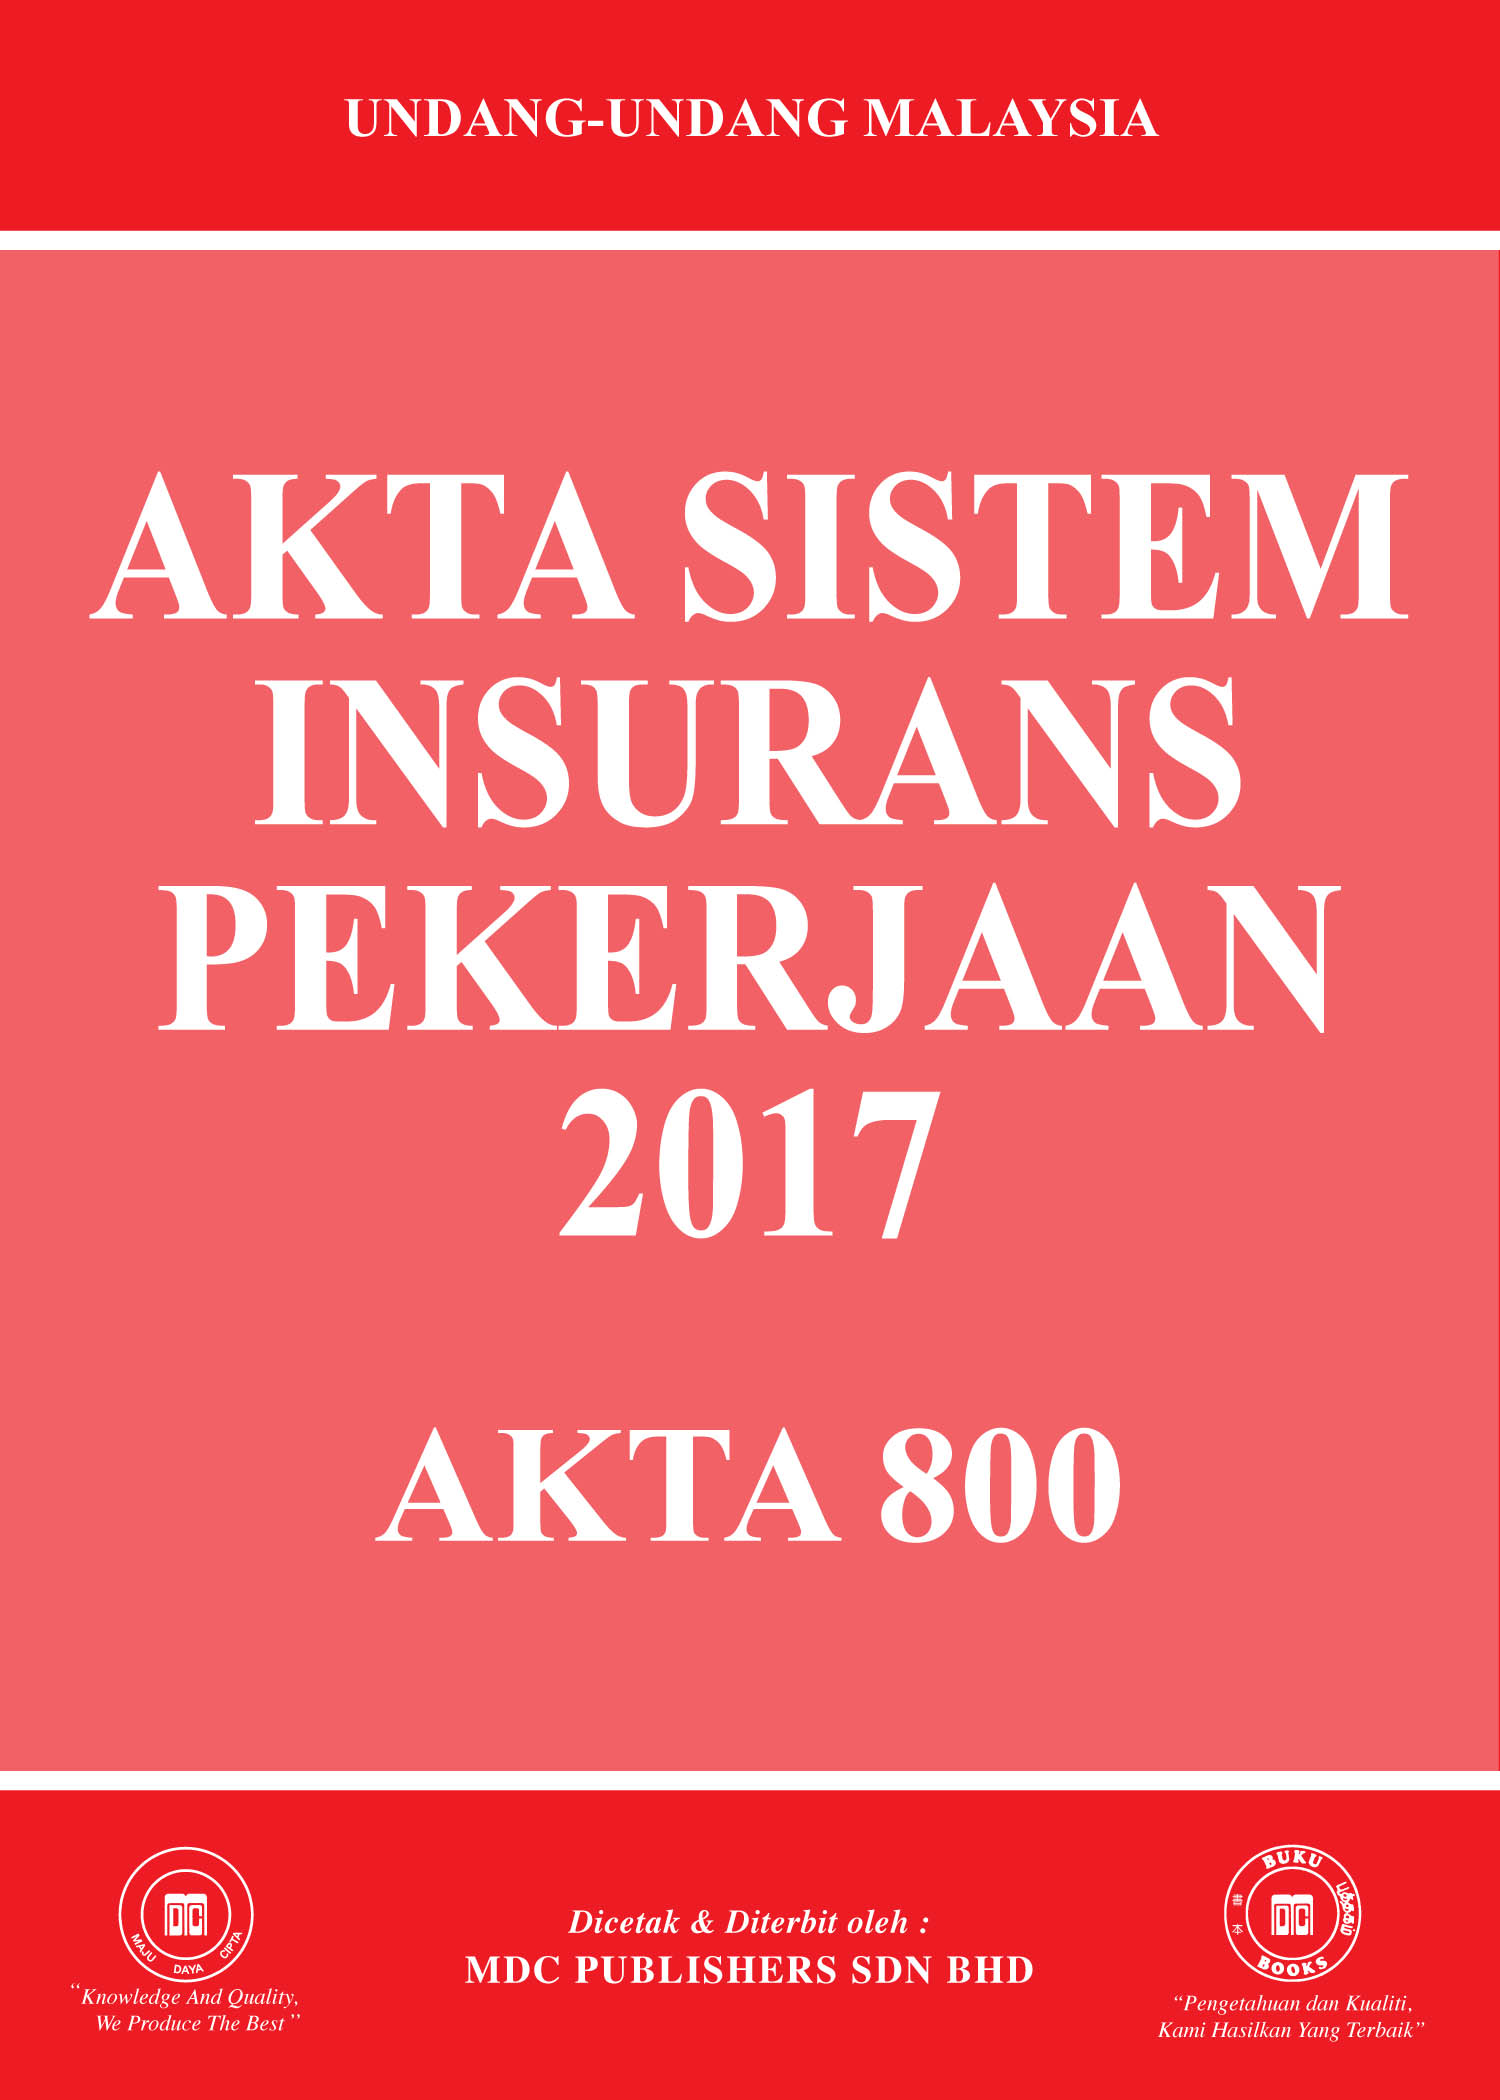 akta-sistem-insurans-pekerjaan-2017